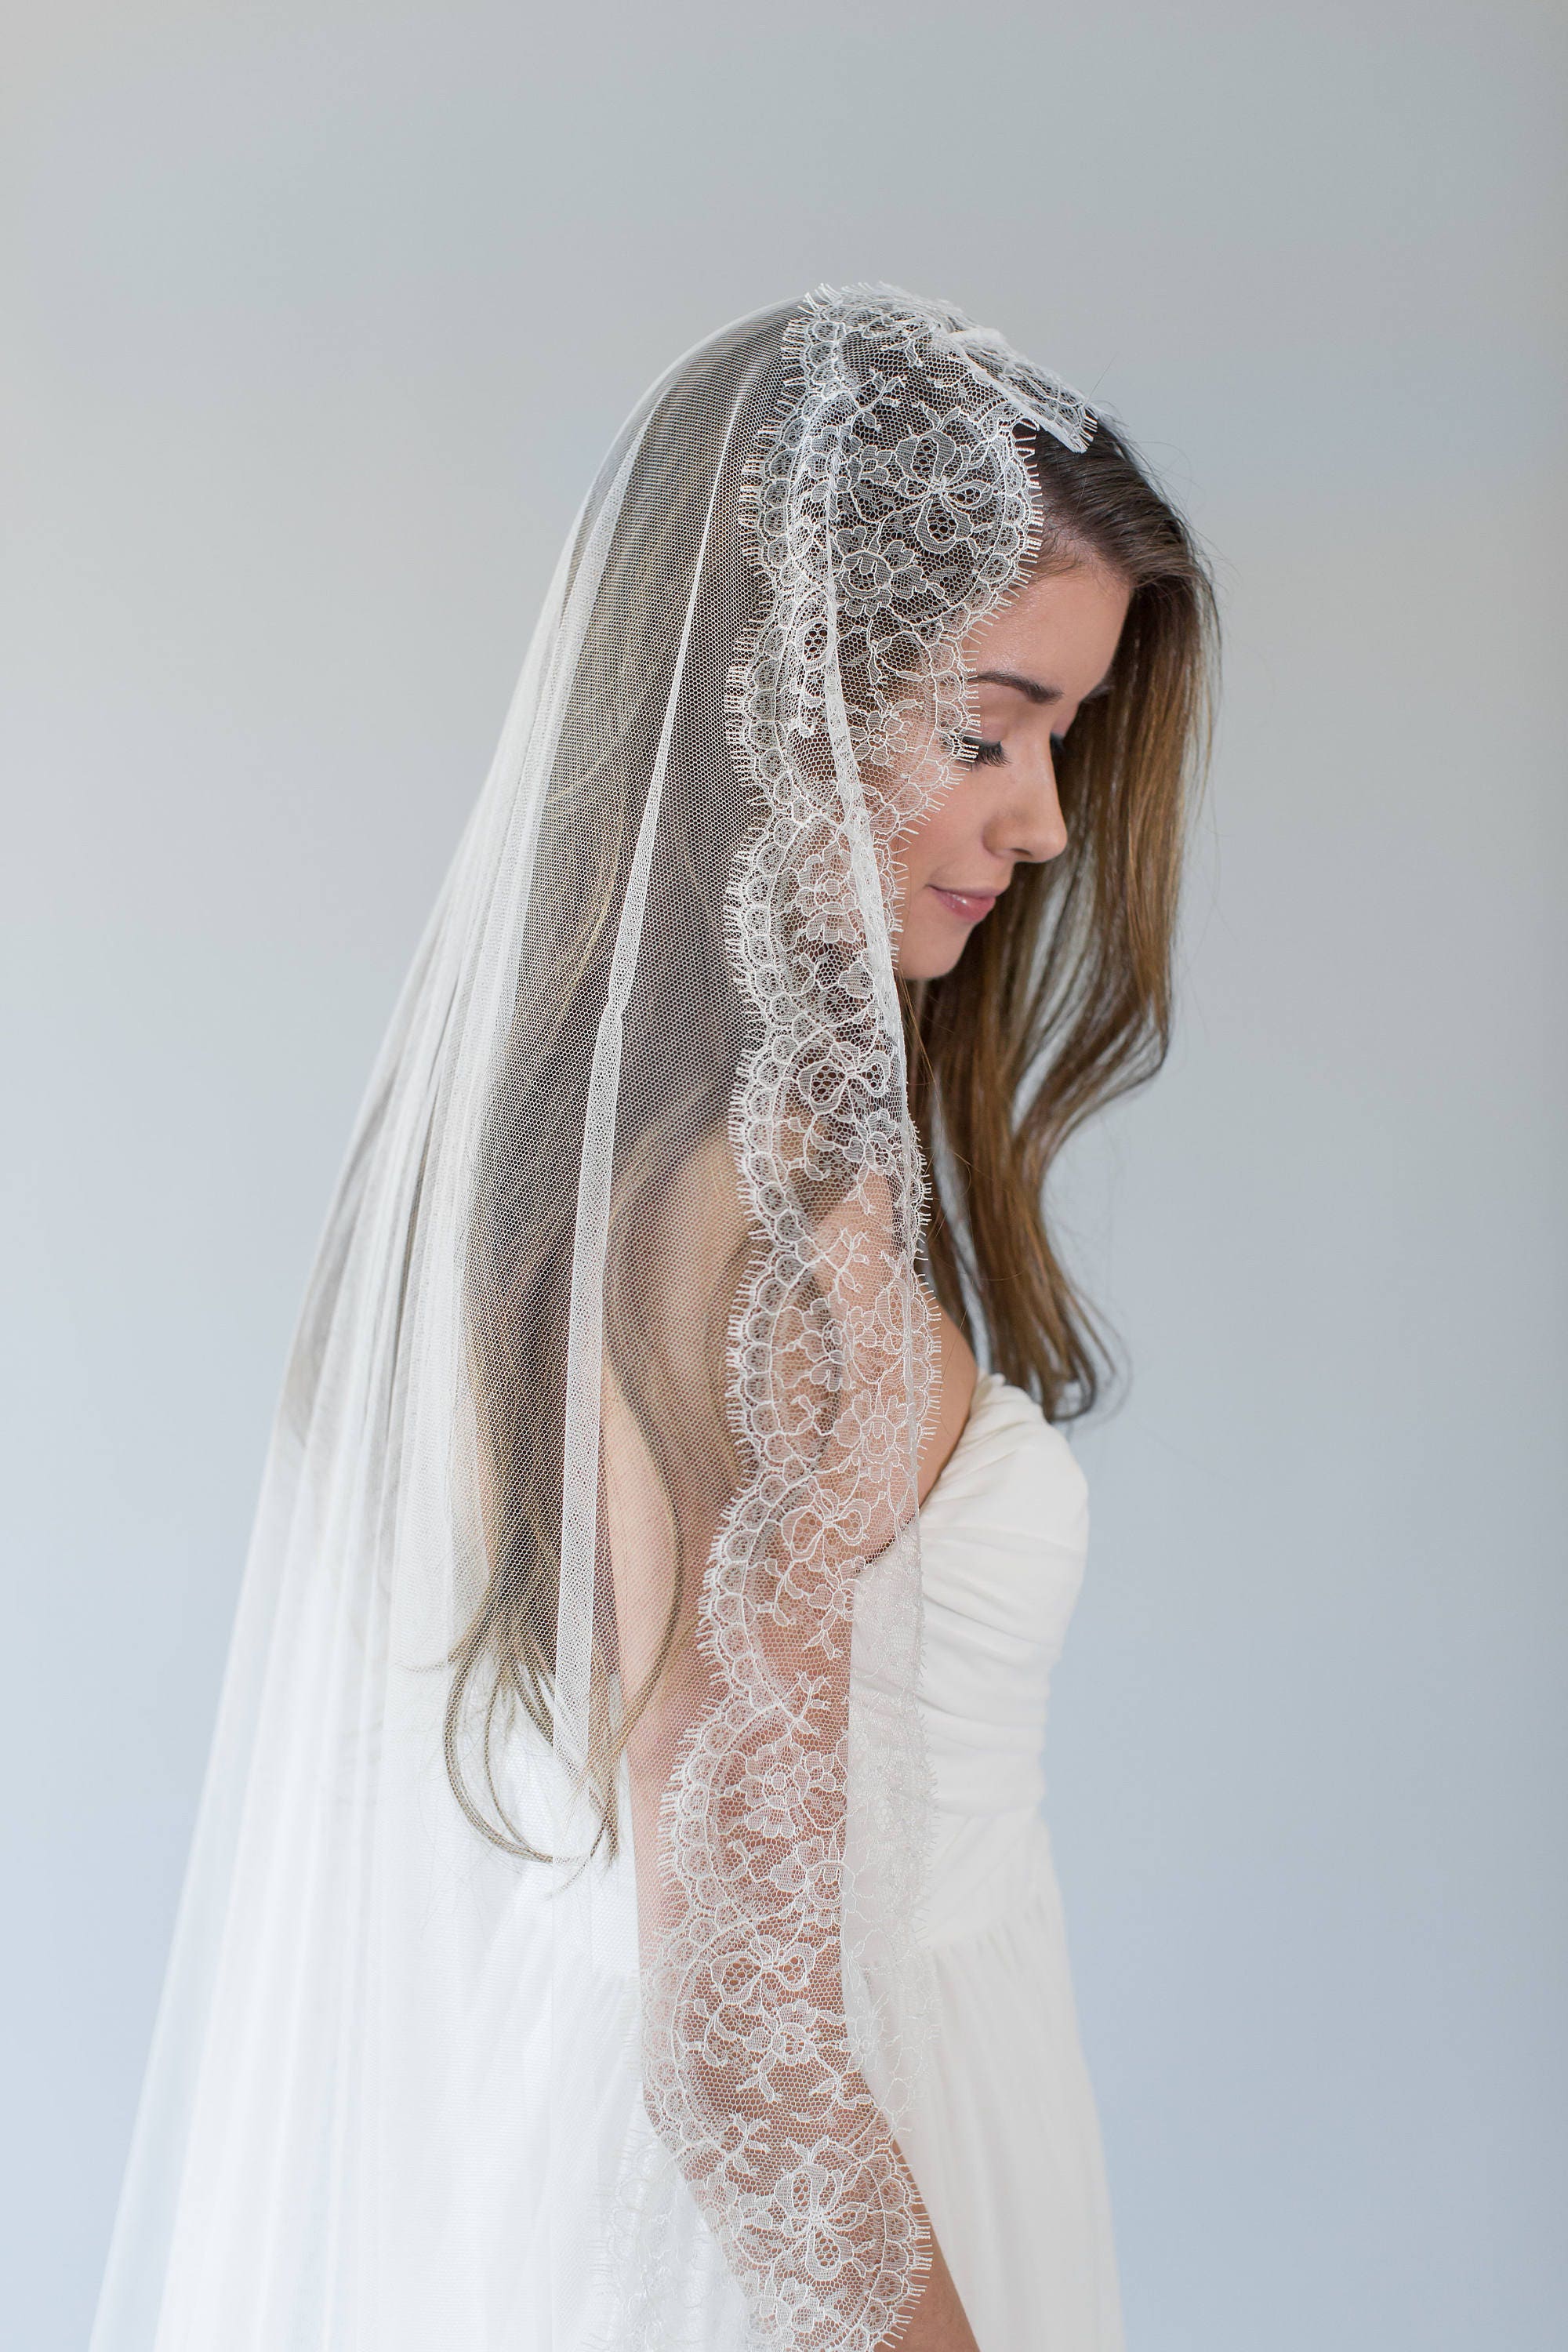 What Is a Mantilla Wedding Veil?